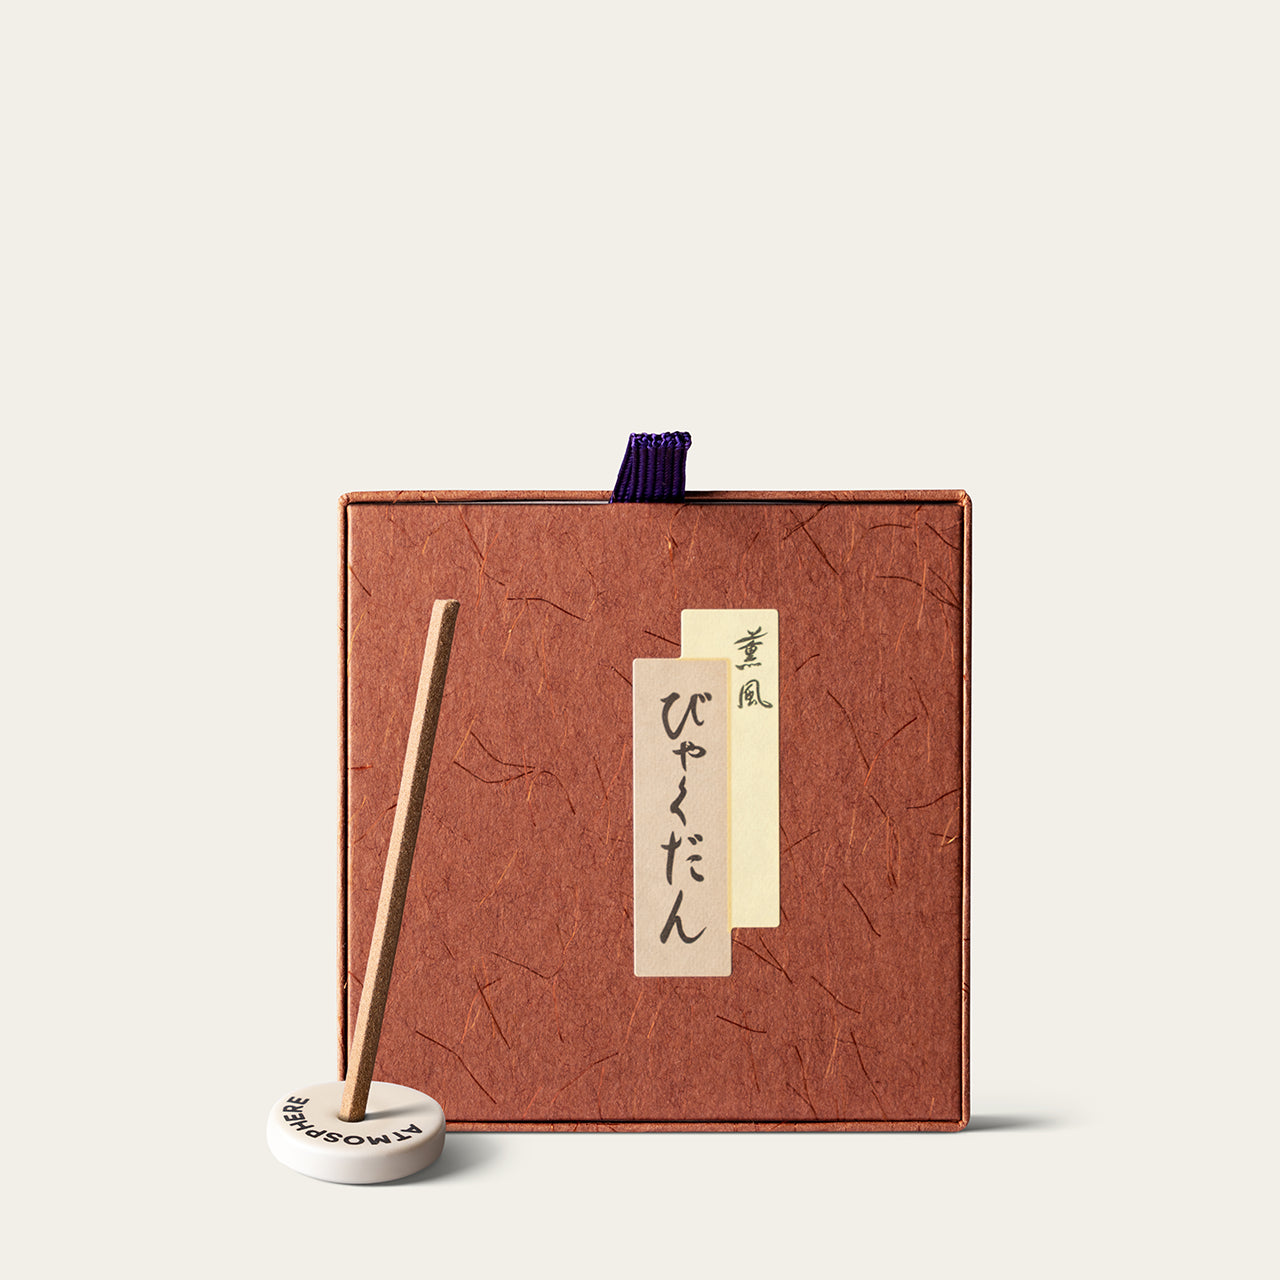 Minorien Kunpu Kunpu Sandalwood Byakudan Japanese incense sticks (60 sticks) with Atmosphere ceramic incense holder